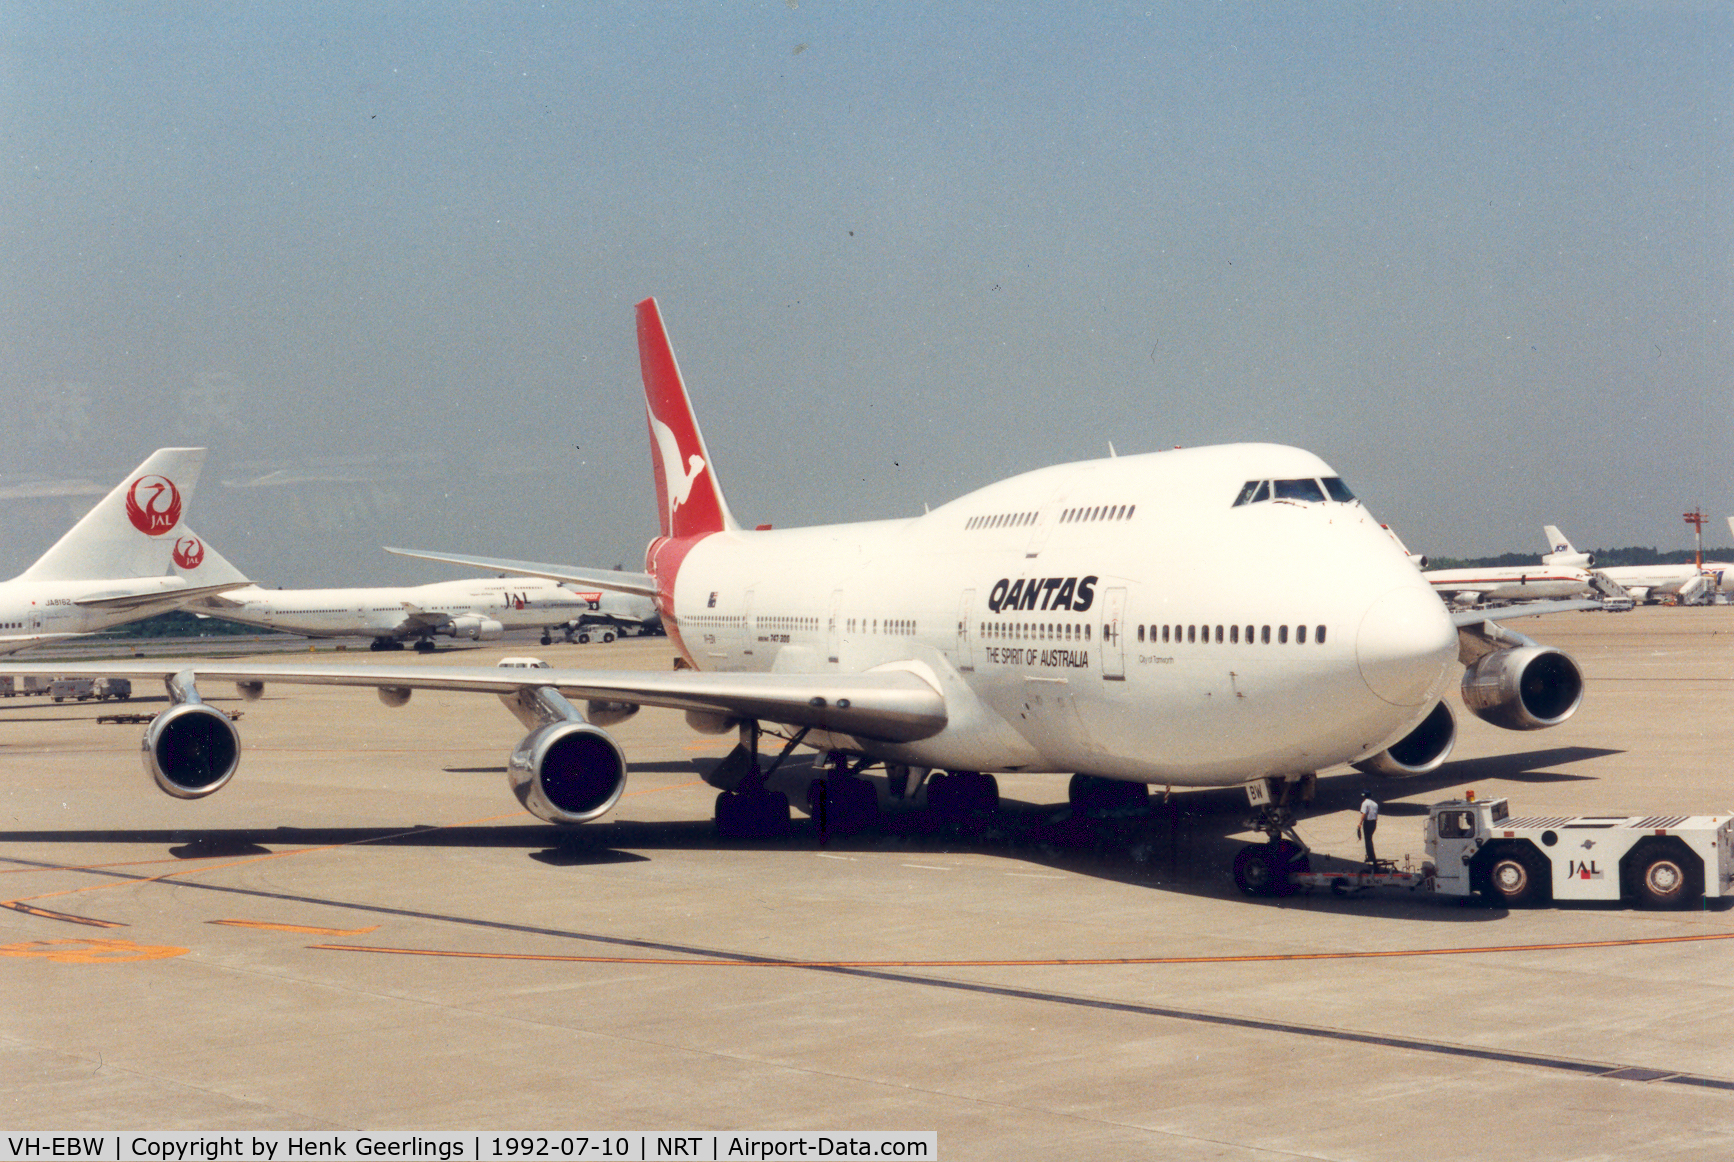 VH-EBW, 1986 Boeing 747-338 C/N 23408, Qantas